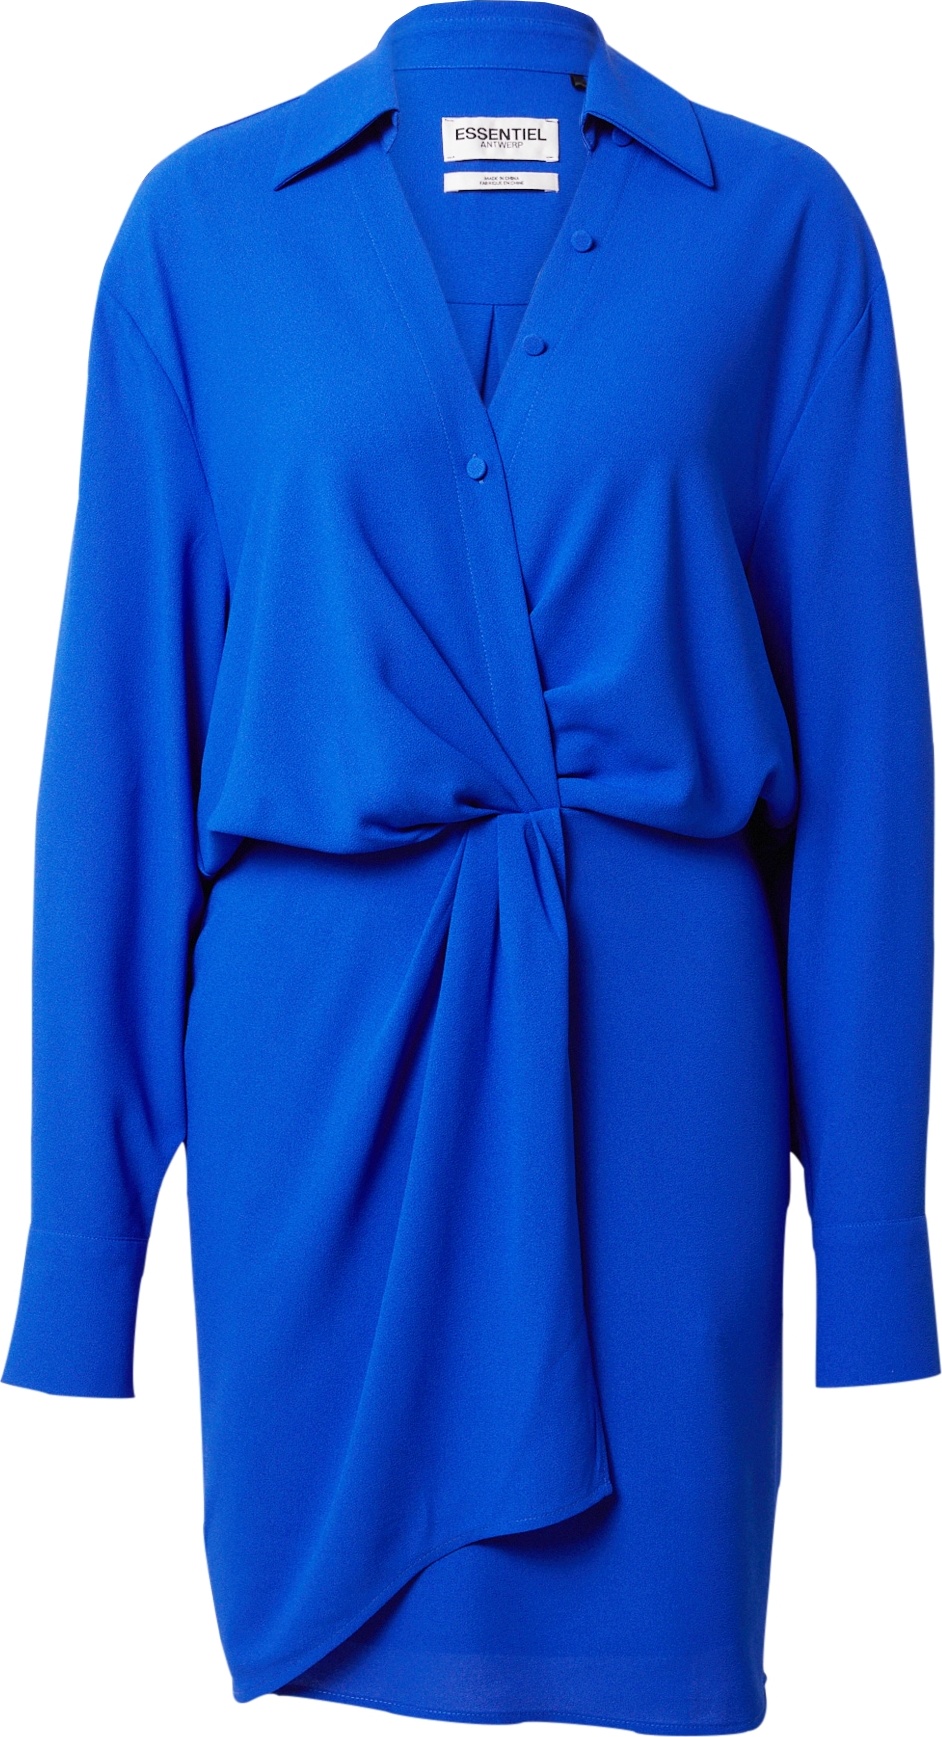 Essentiel Antwerp Košilové šaty 'Dorsey' kobaltová modř